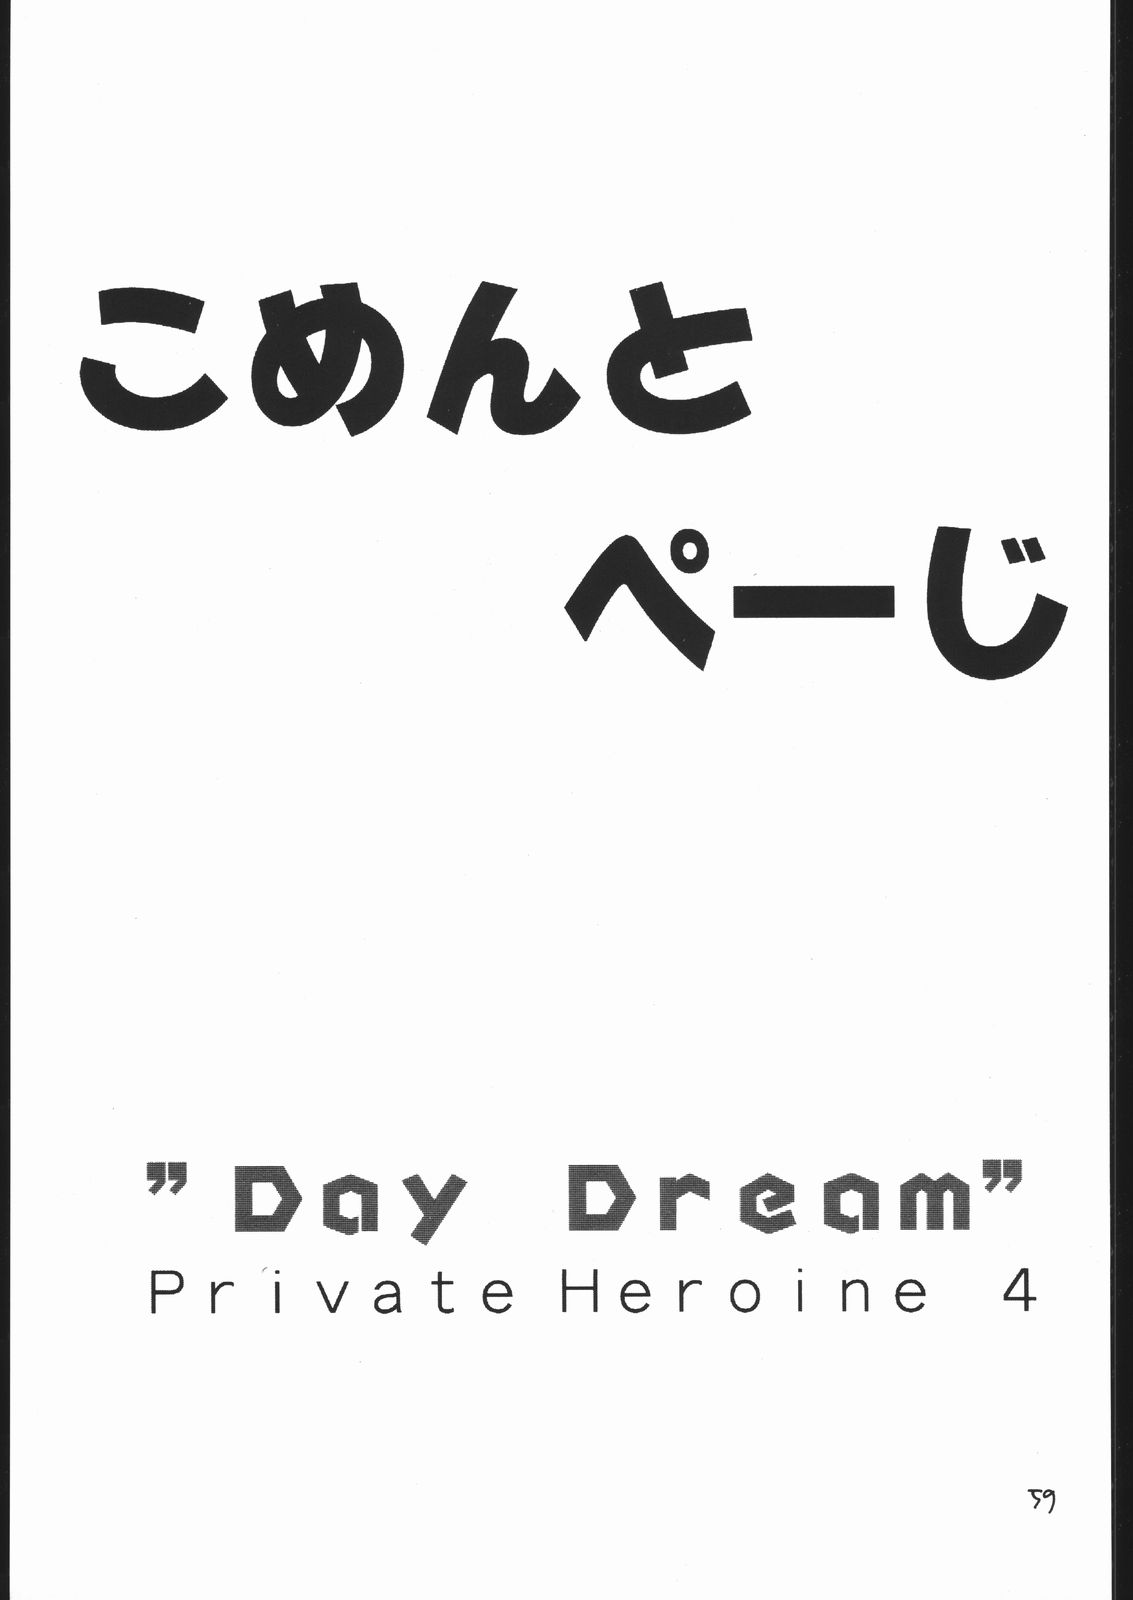 (C53) [bolze.、御御御付 (rit.、さなり、しらゆき将士郎)] DAY DREAM PRIVATE HEROINE 4 (トゥハート、ときめきメモリアル)